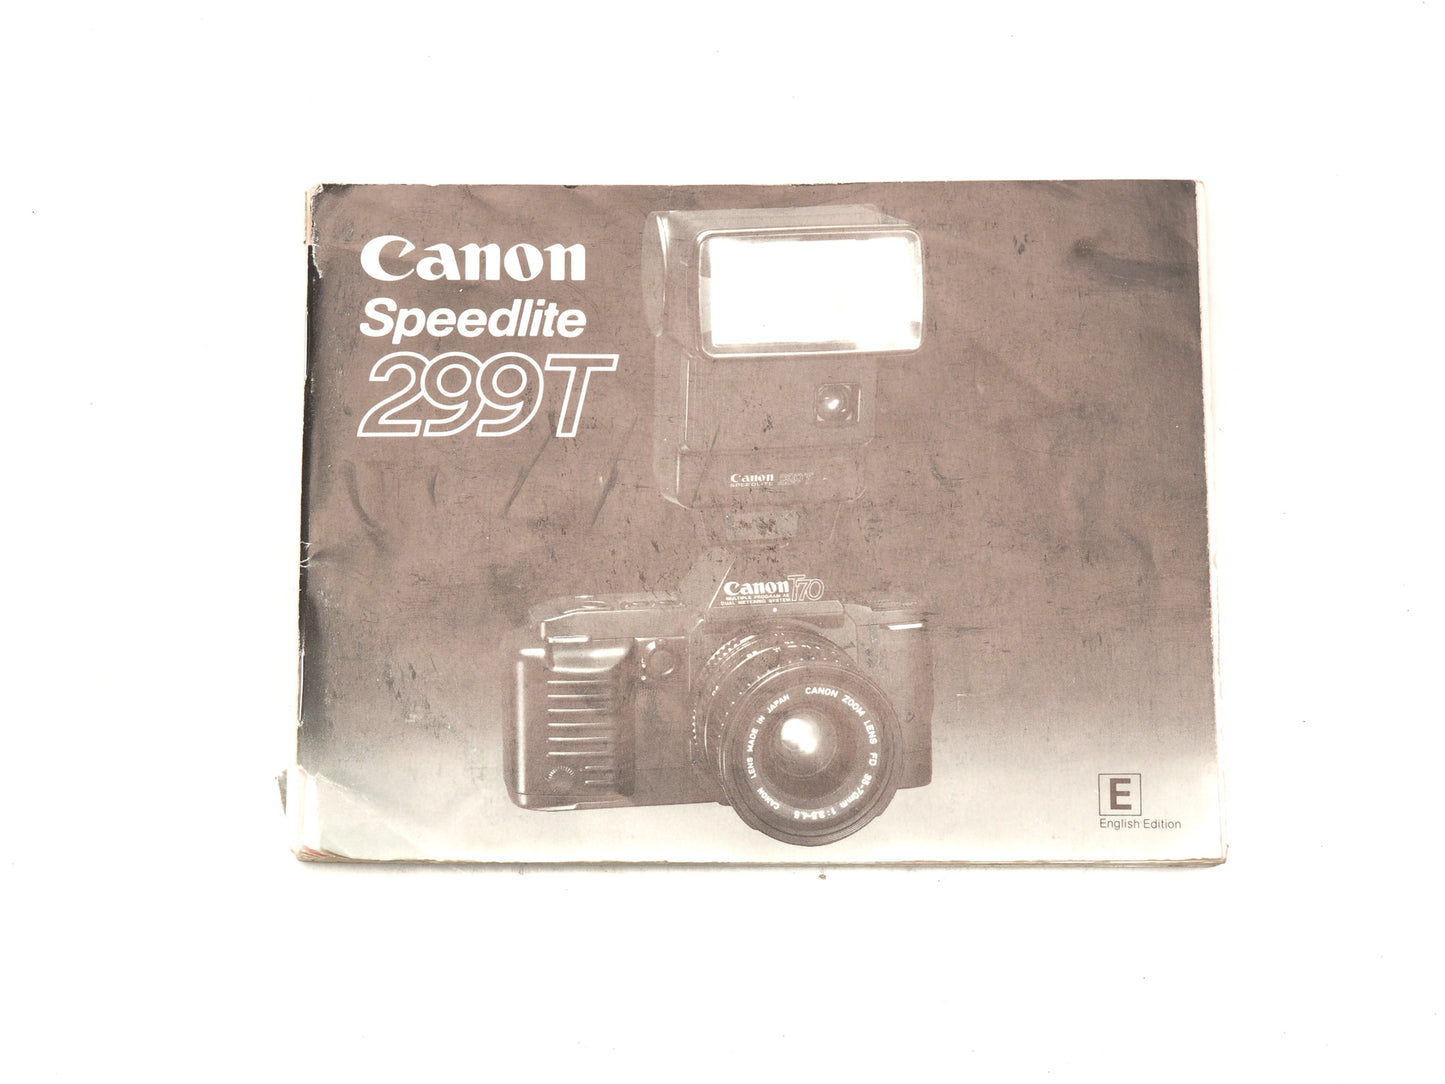 Canon Speedlite 299T Instructions